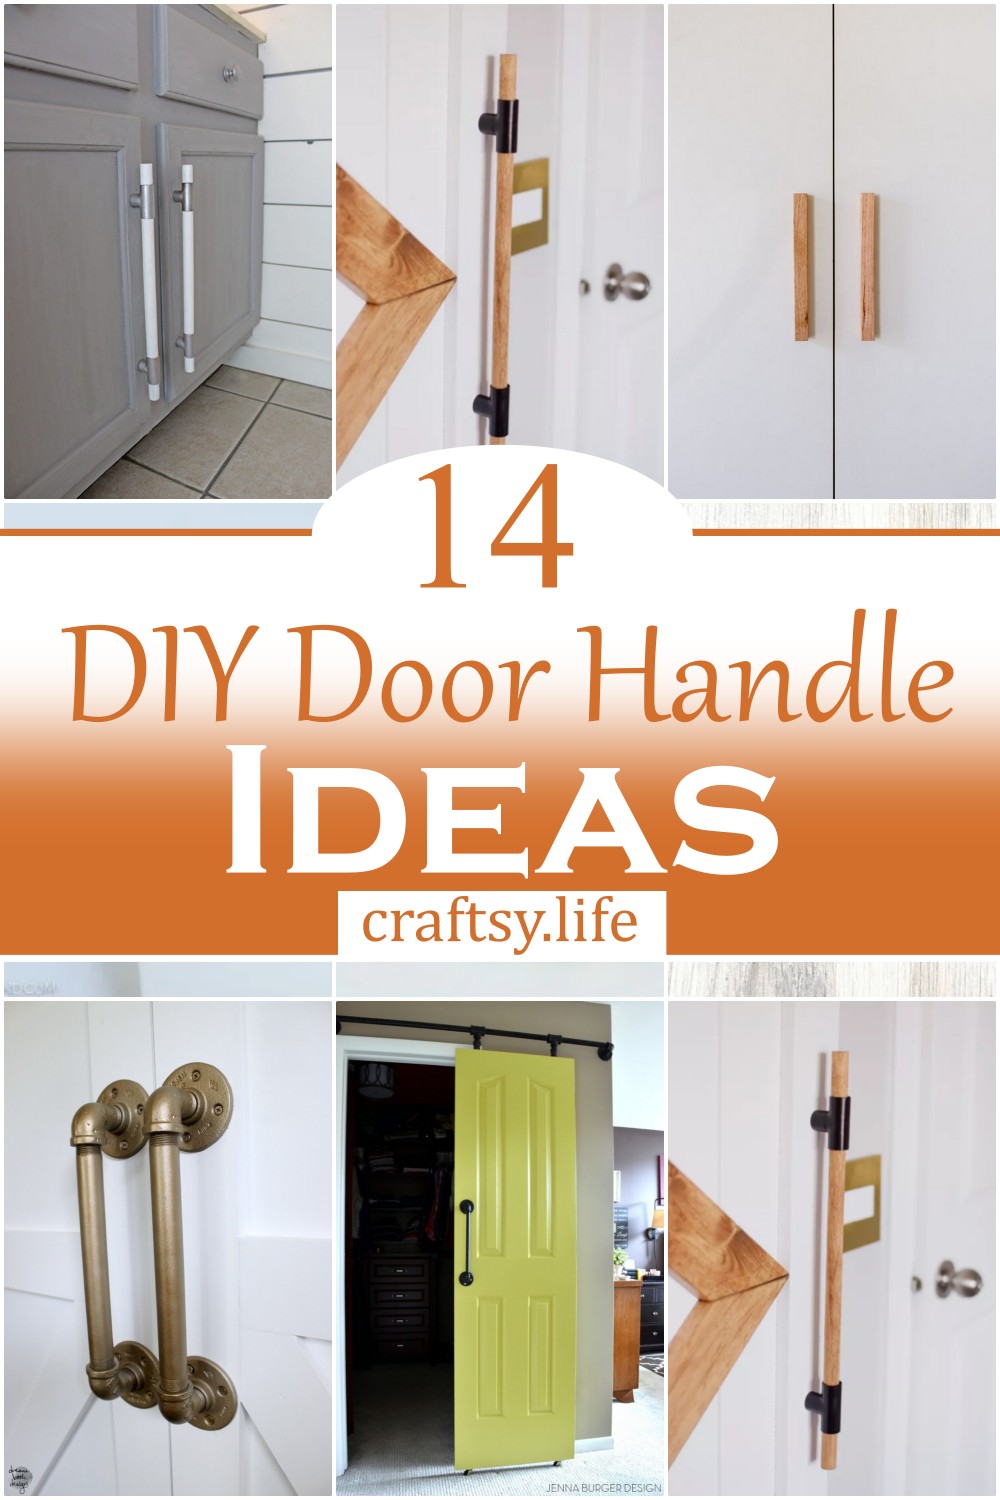 DIY Door Handle Ideas